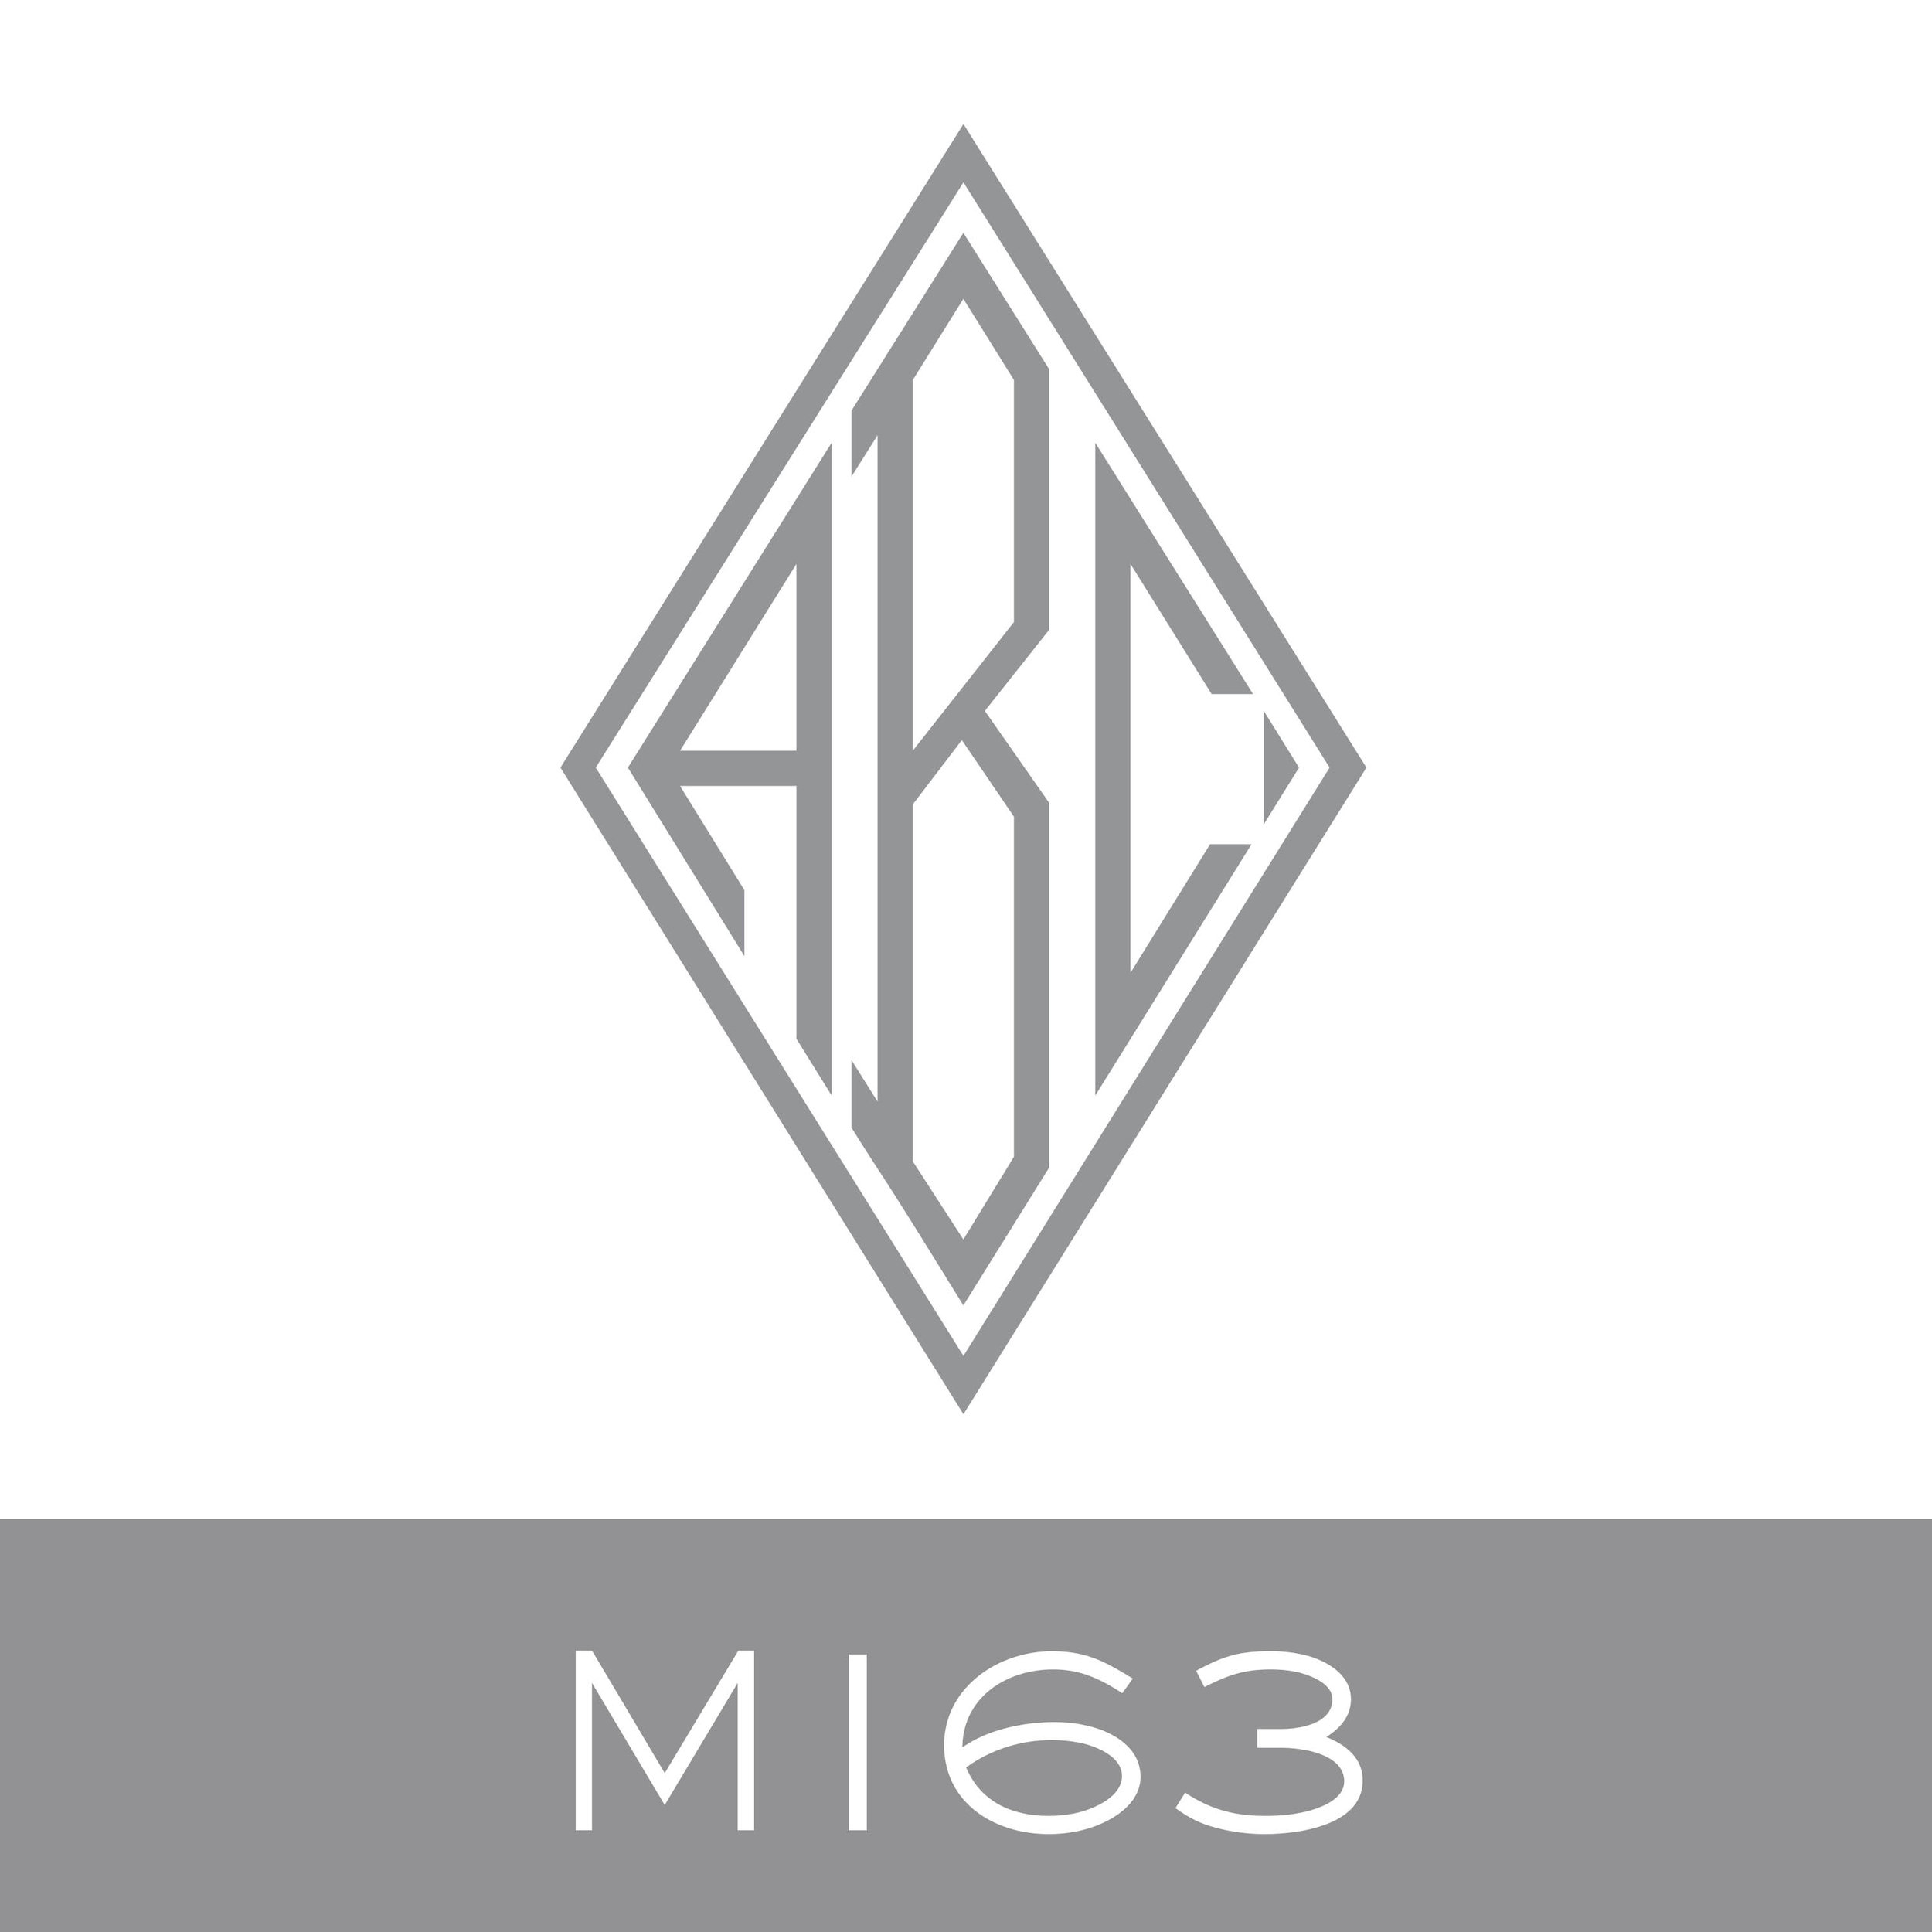 M163.jpg